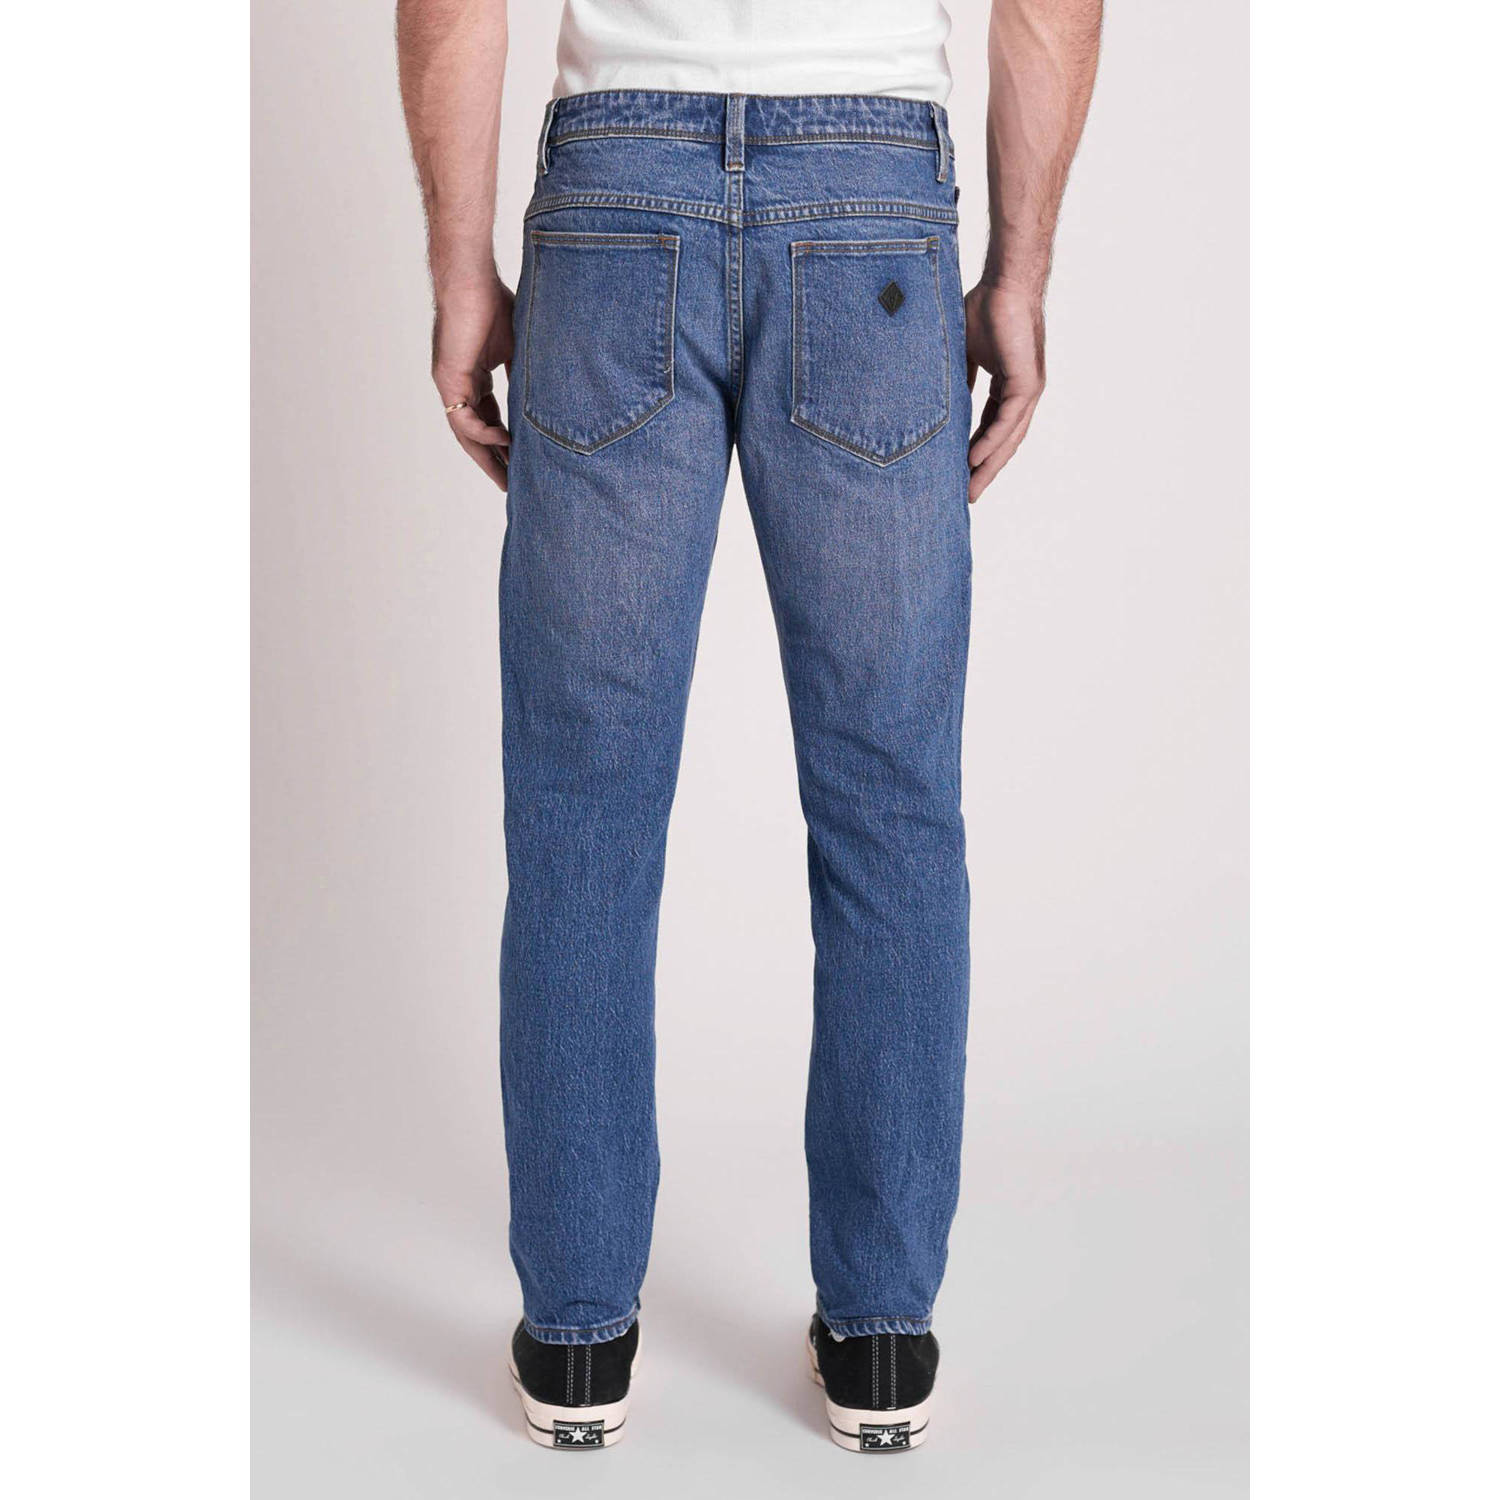 Abrand Jeans slim fit jeans DAILY OPERATI dark vintage indigo